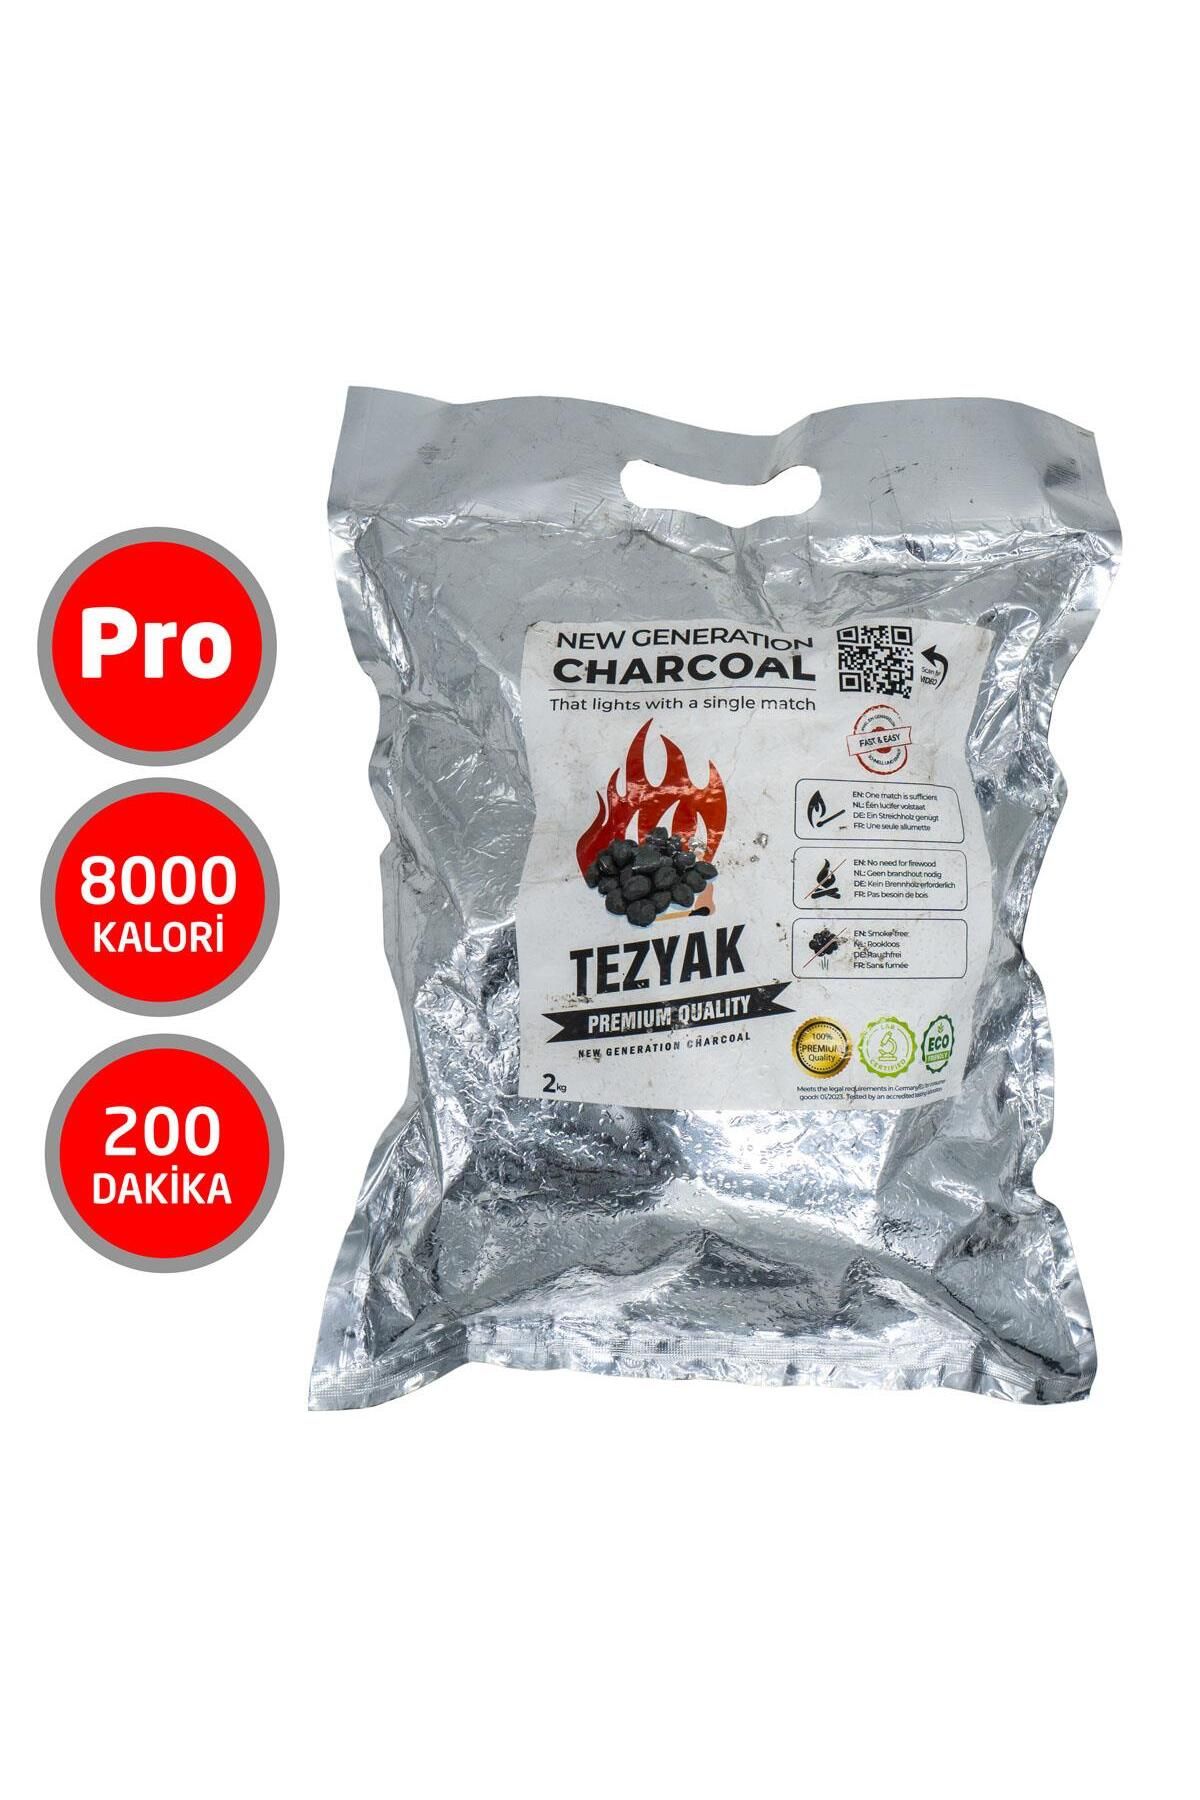 TEZYAK Pro Tek Kibritle Yanan Mangal Kömürü 200dk (2Kg Paket)